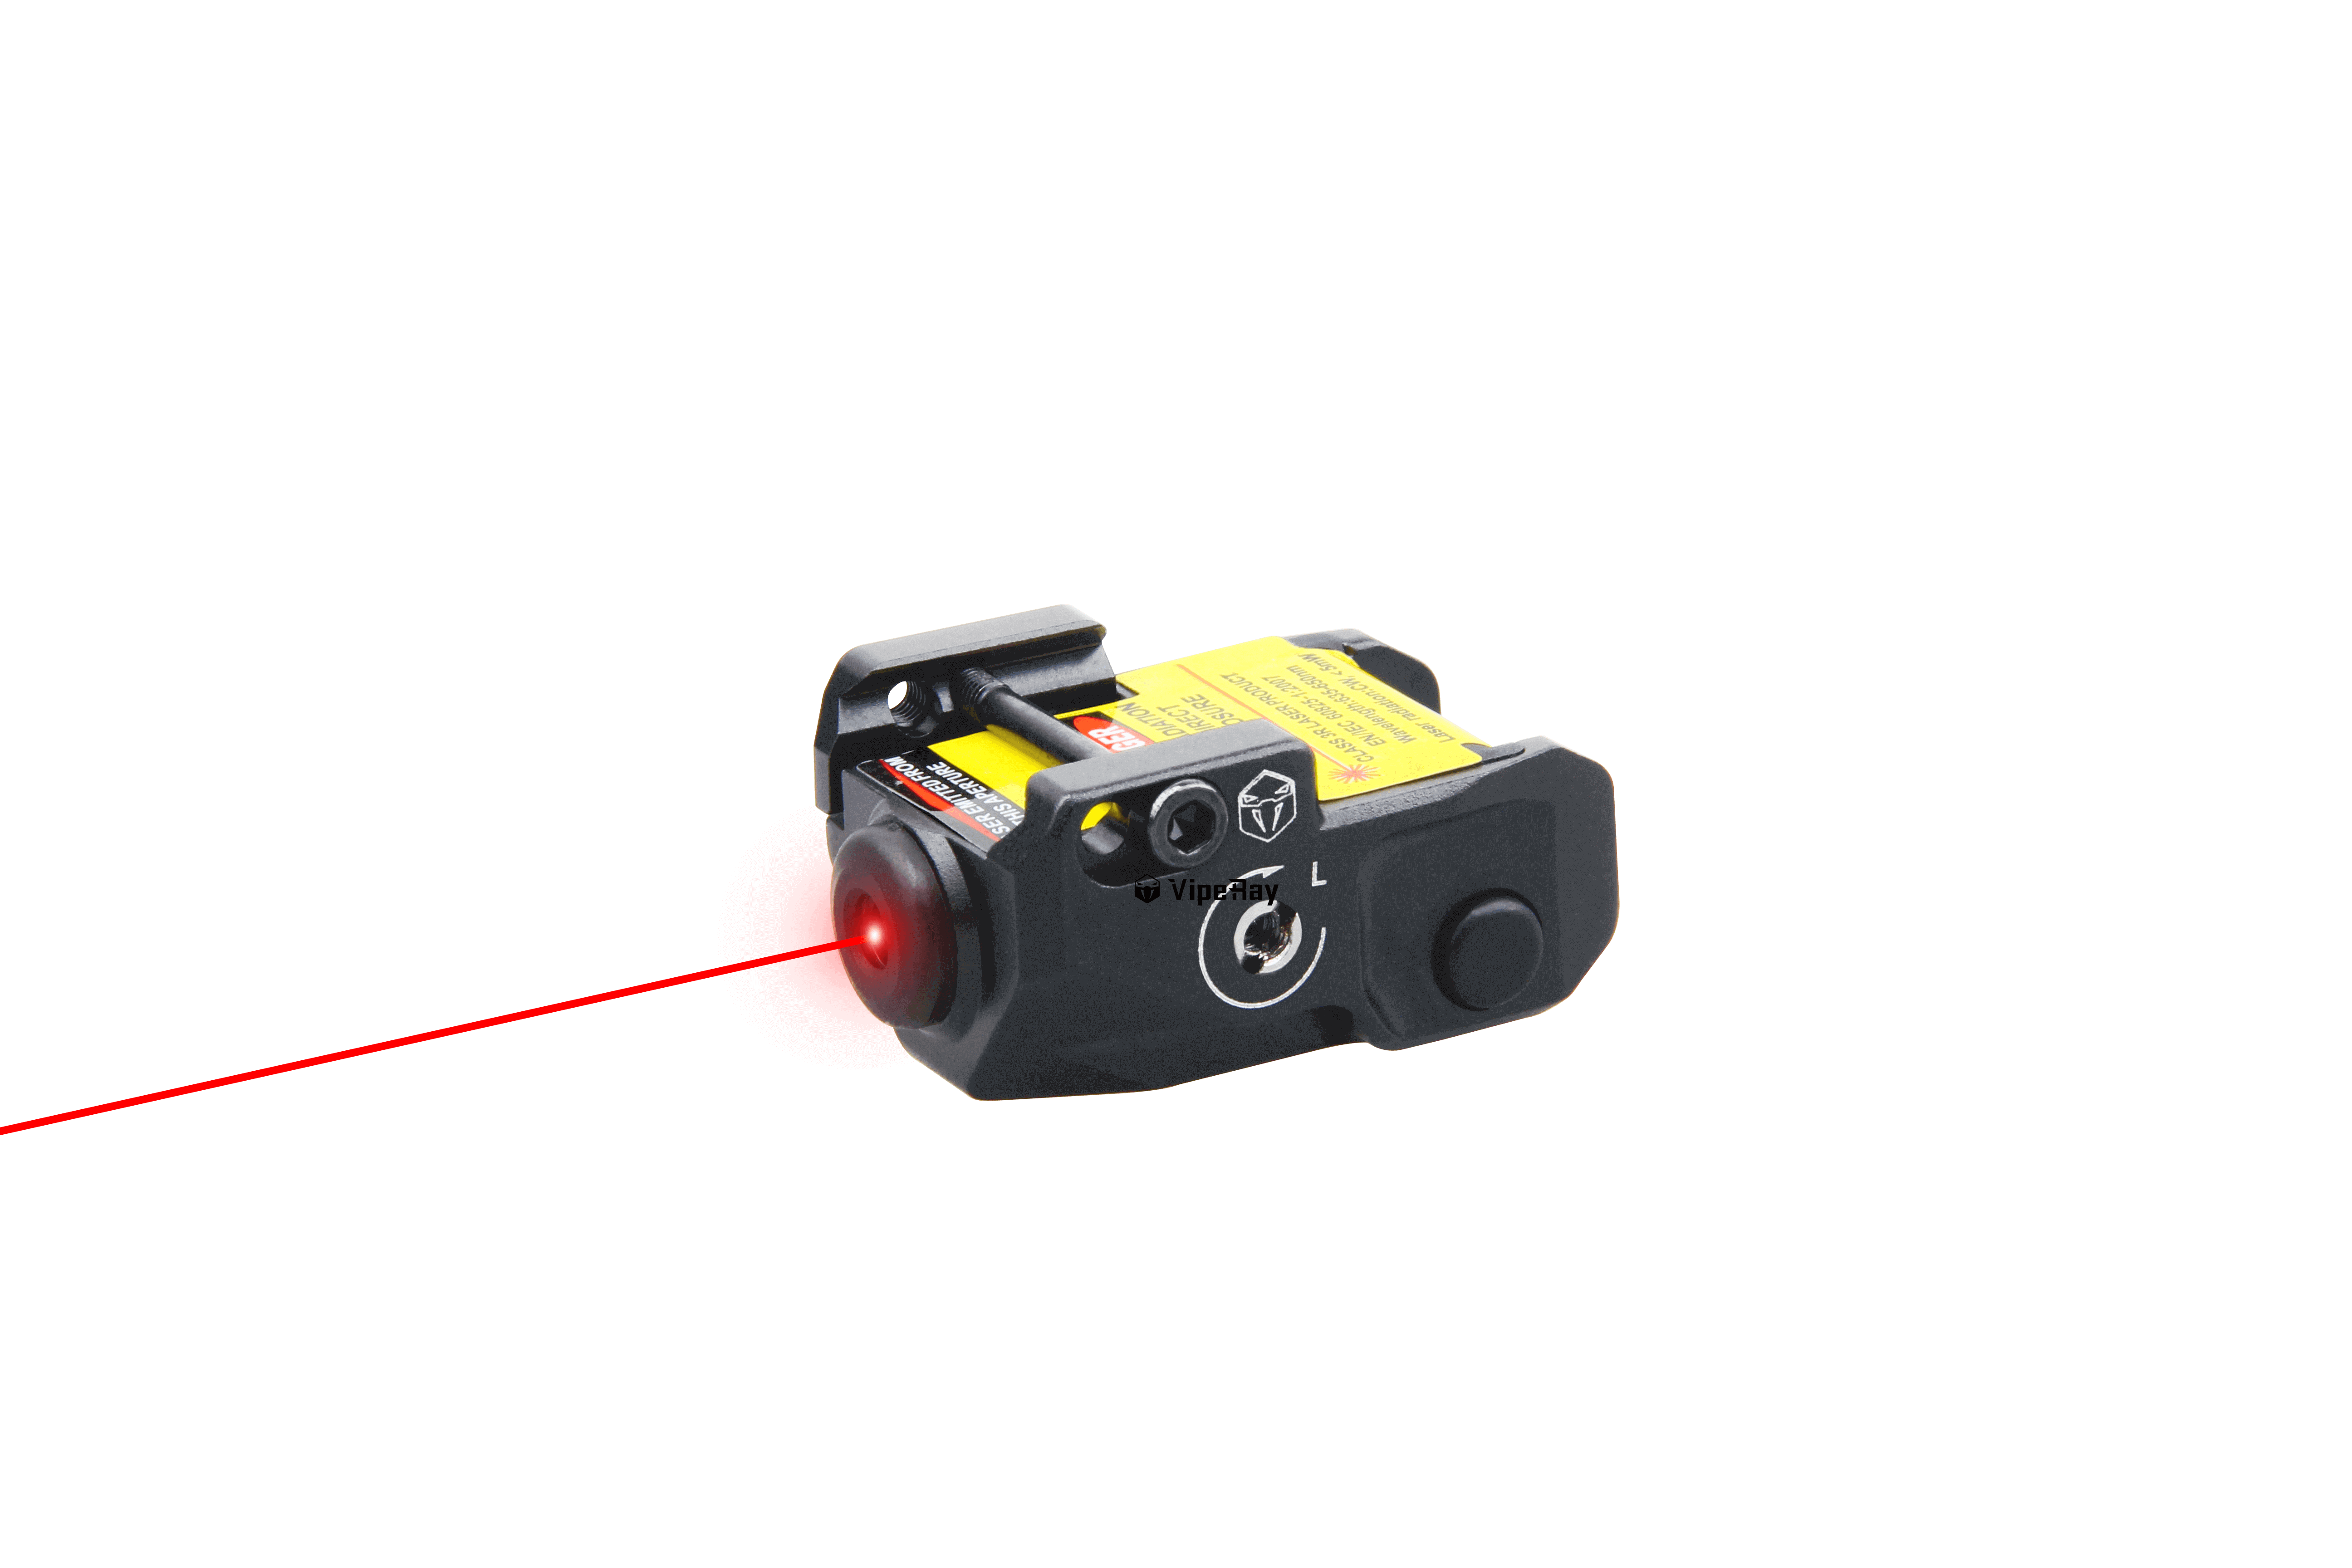 VipeRay Scrapper Subcompact Pistol Red Laser Sight